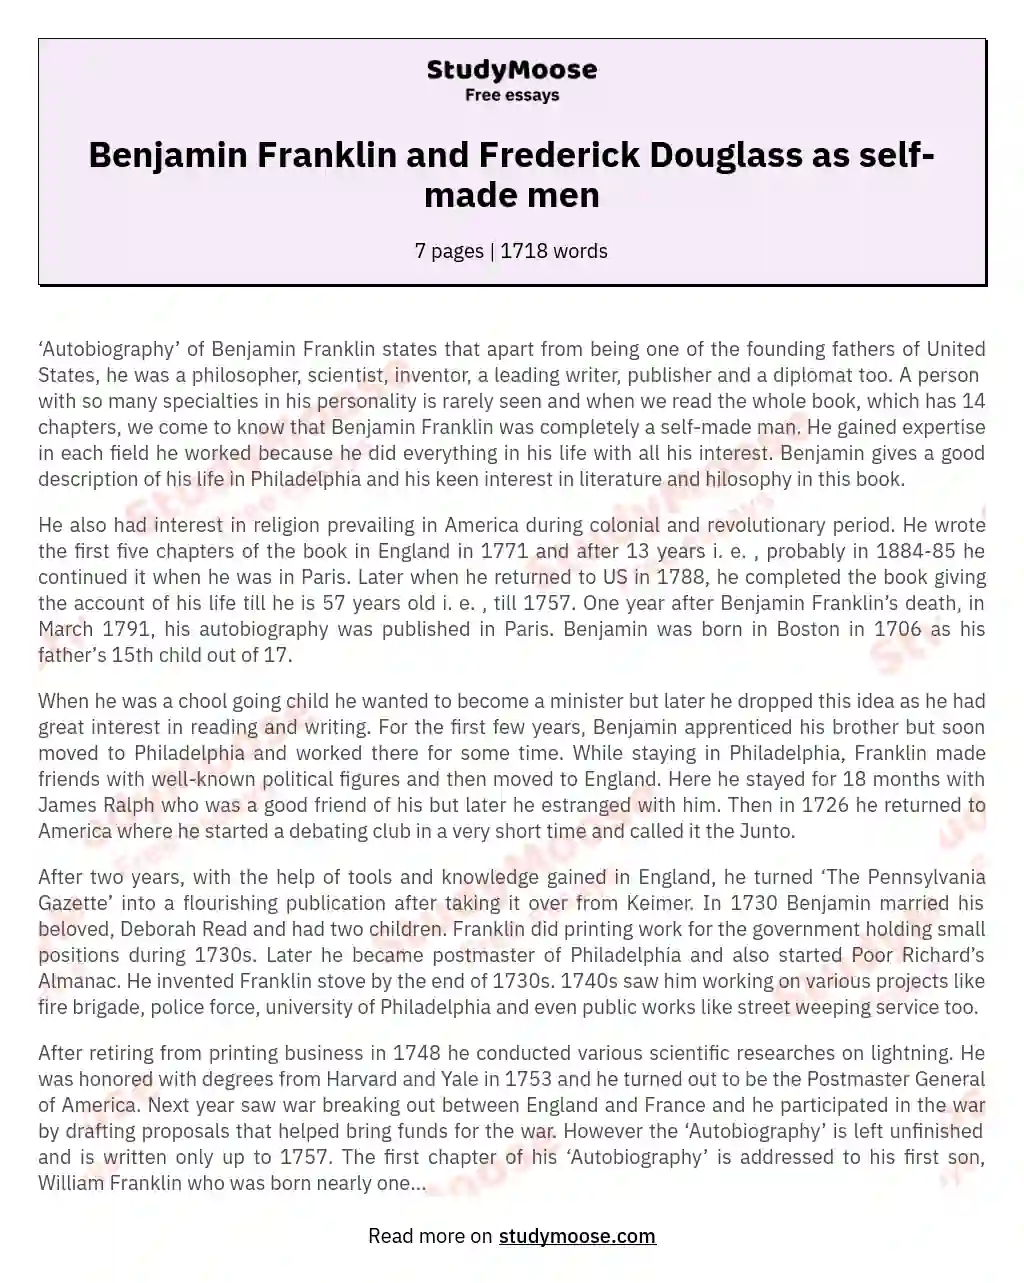 Benjamin Franklin and Frederick Douglass as self-made men